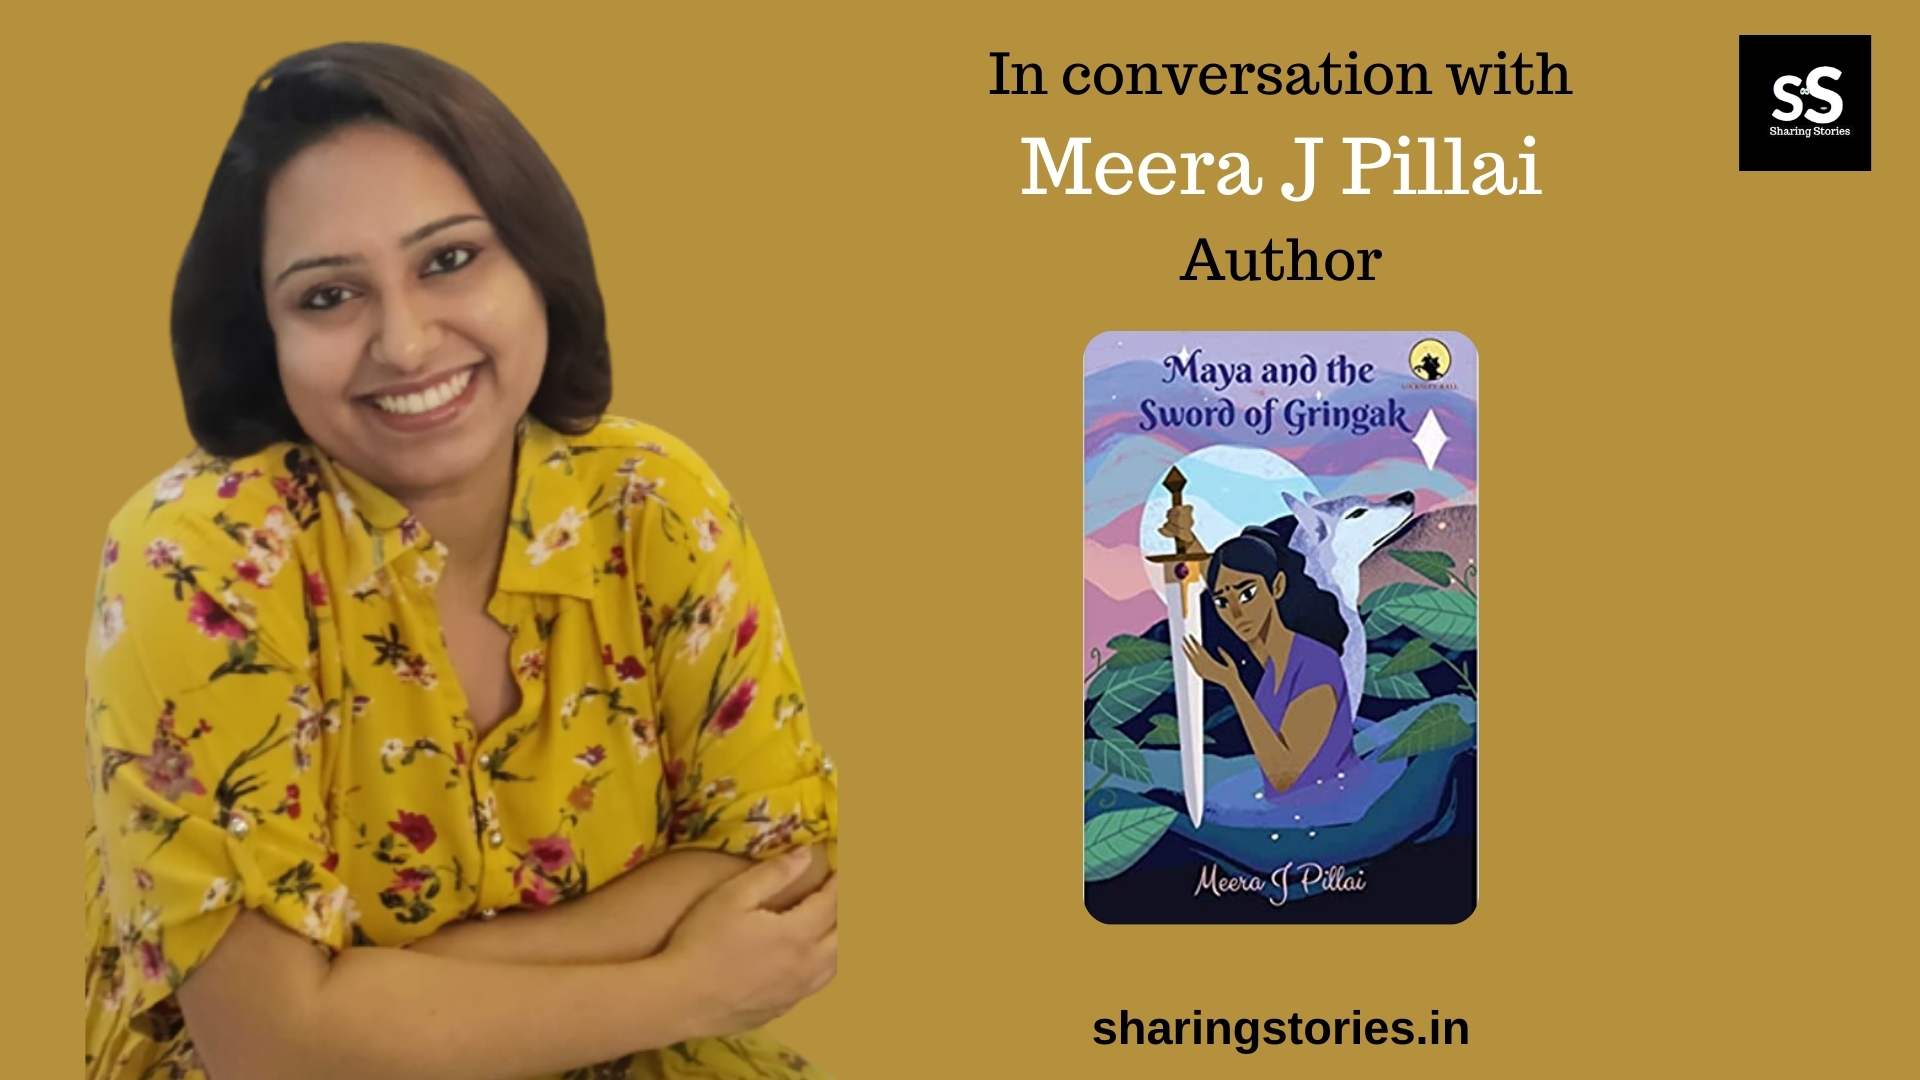 Author Meera J Pillai